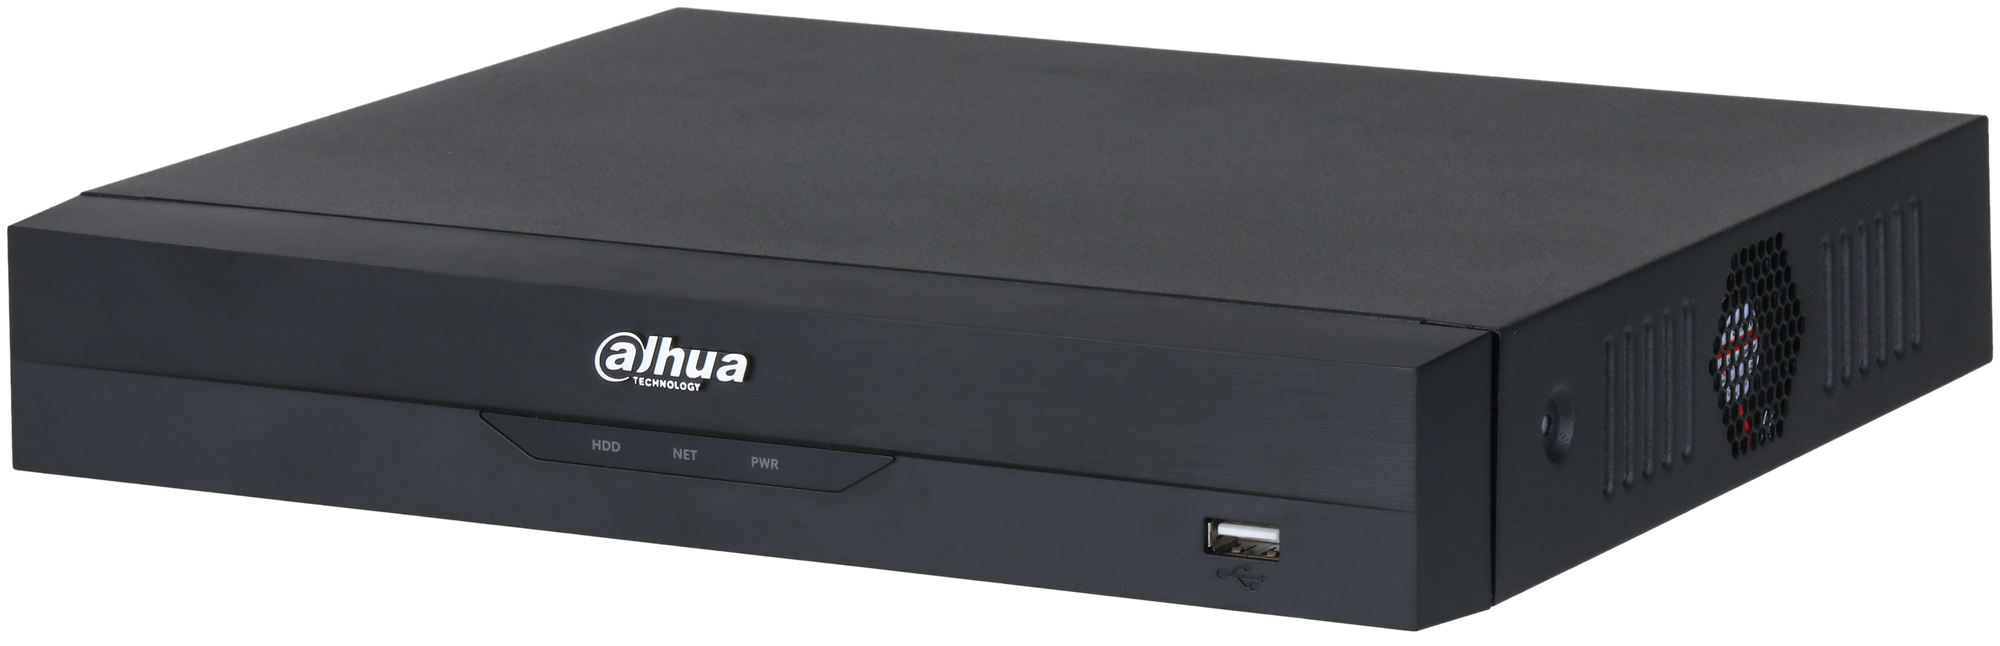 Видеорегистратор 12Мп 4-канальный IP с poE 1 SATA HDD с SMD и ONVIF для дома дачи и офиса Dahua DHI-NVR2104HS-P-I